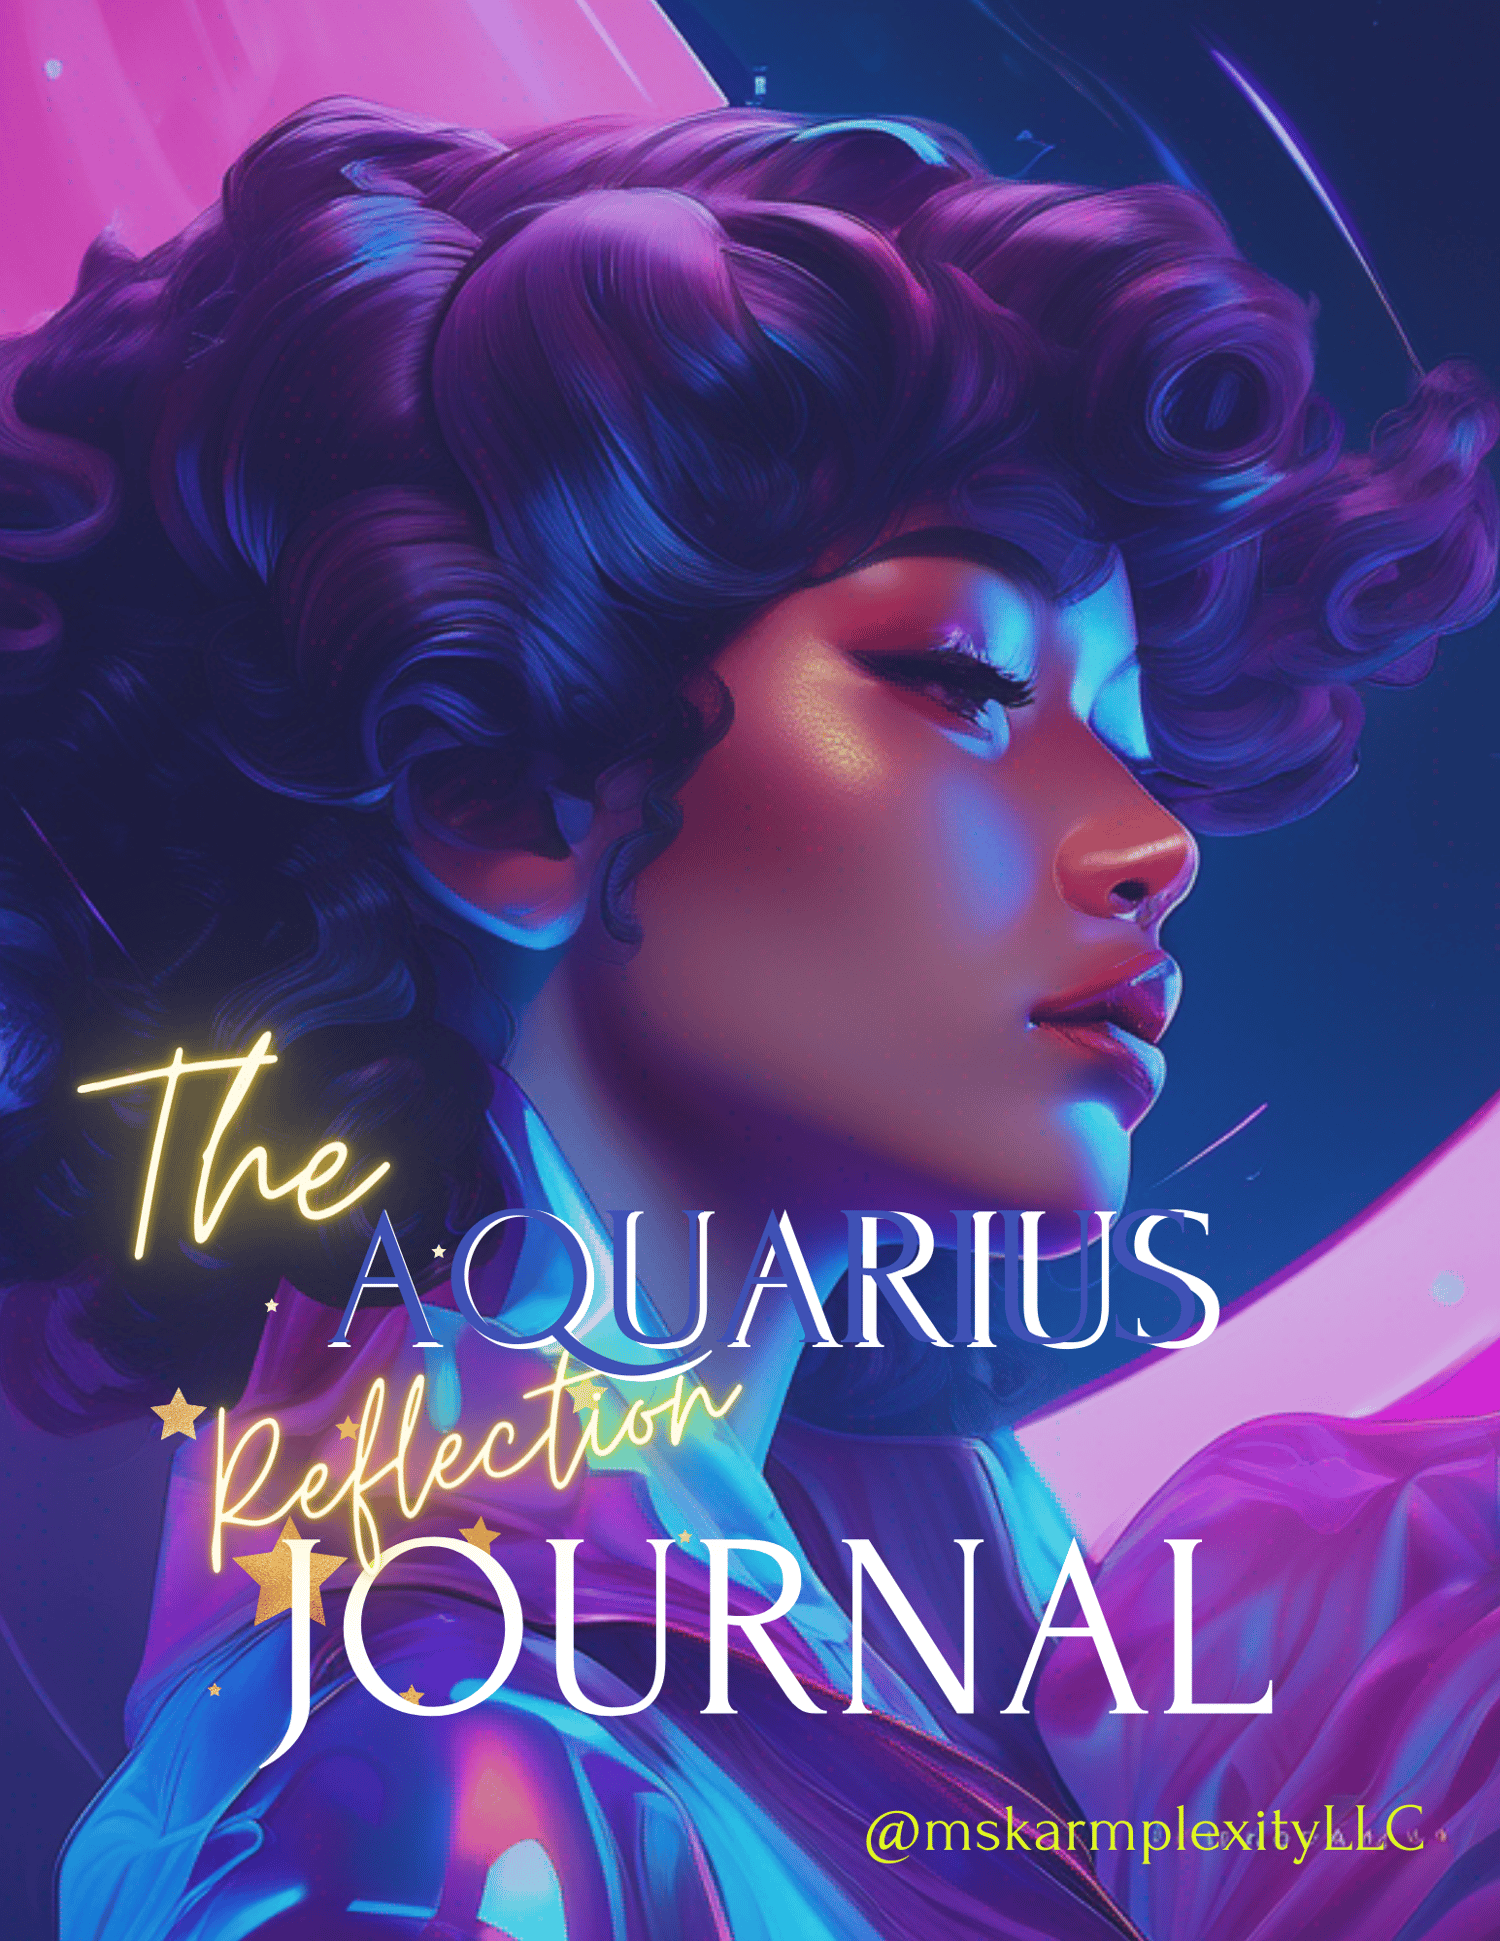 The Aquarius Reflection Journal